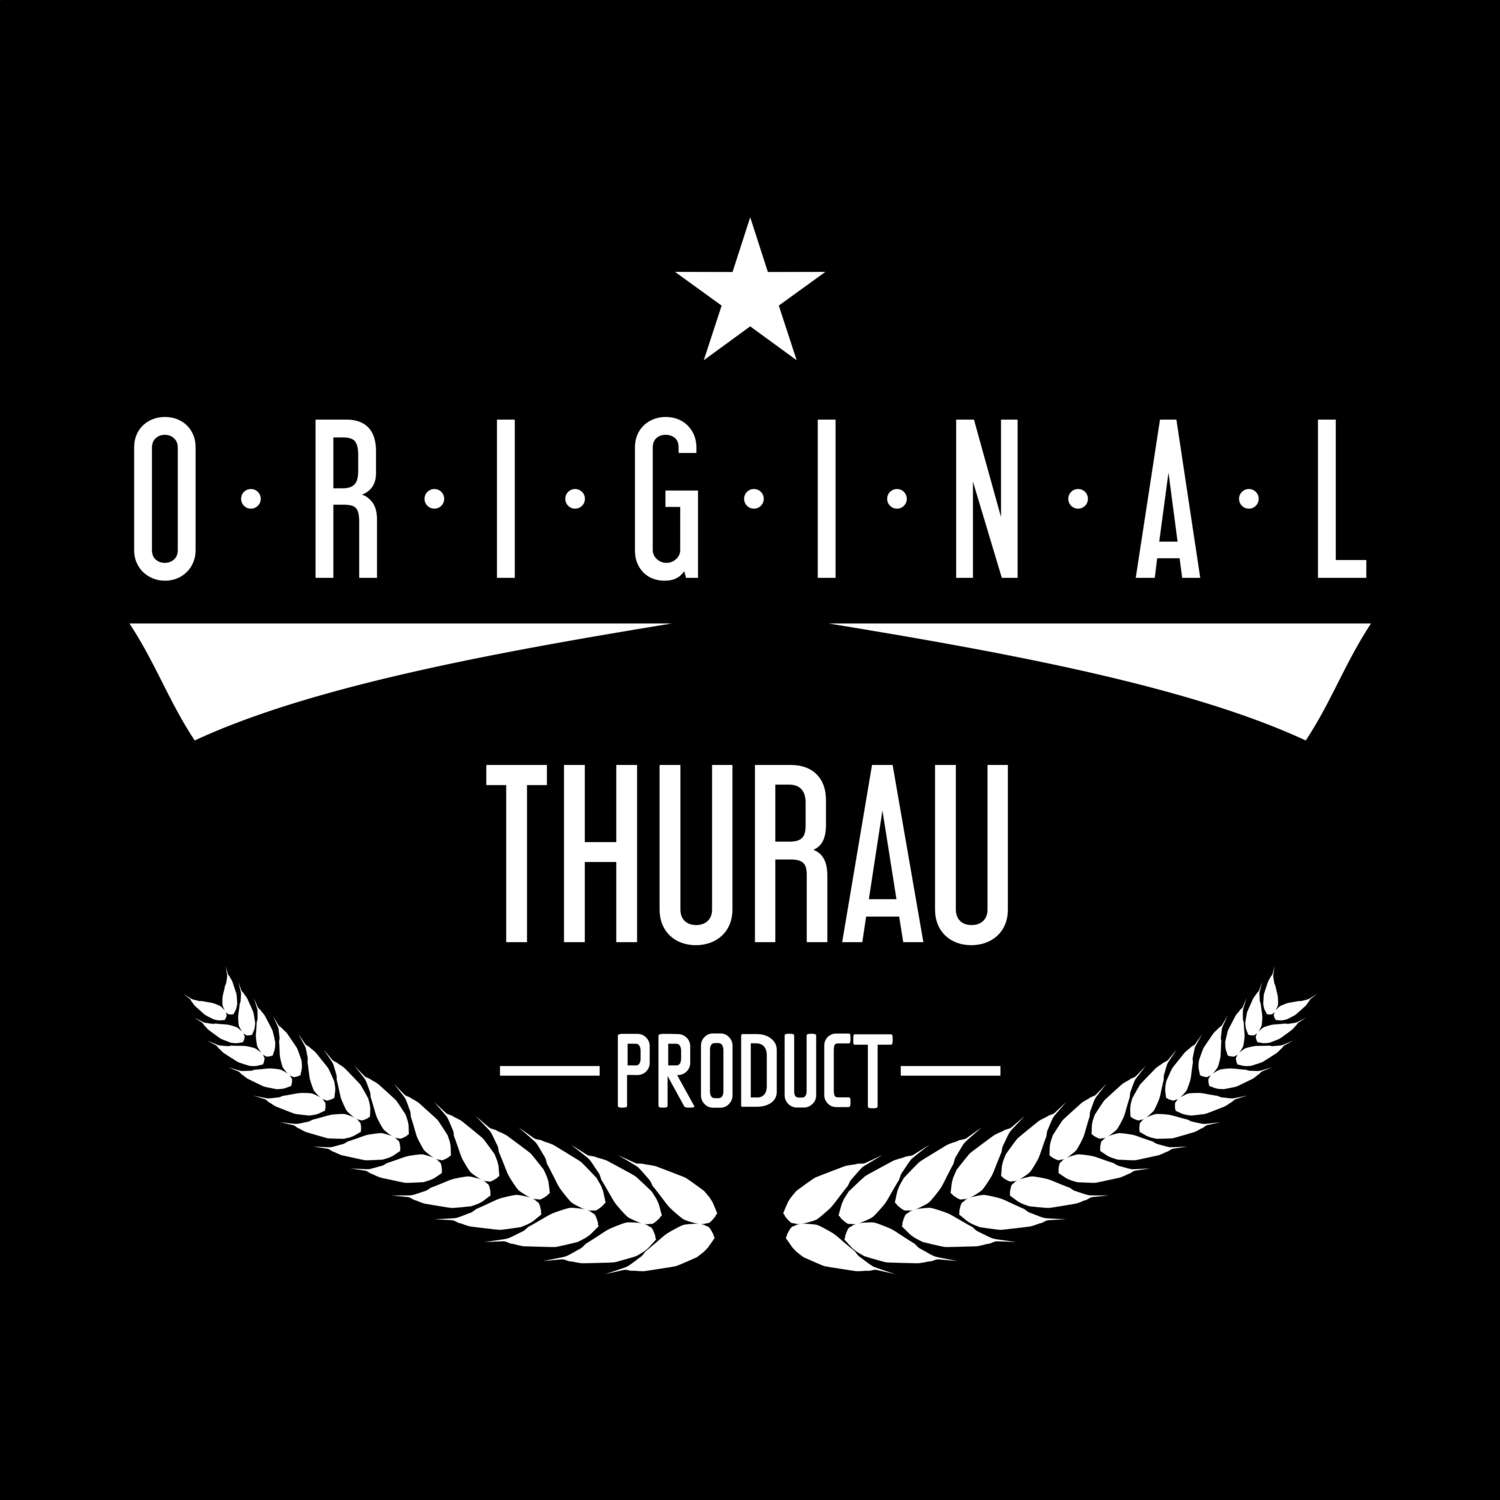 Thurau T-Shirt »Original Product«